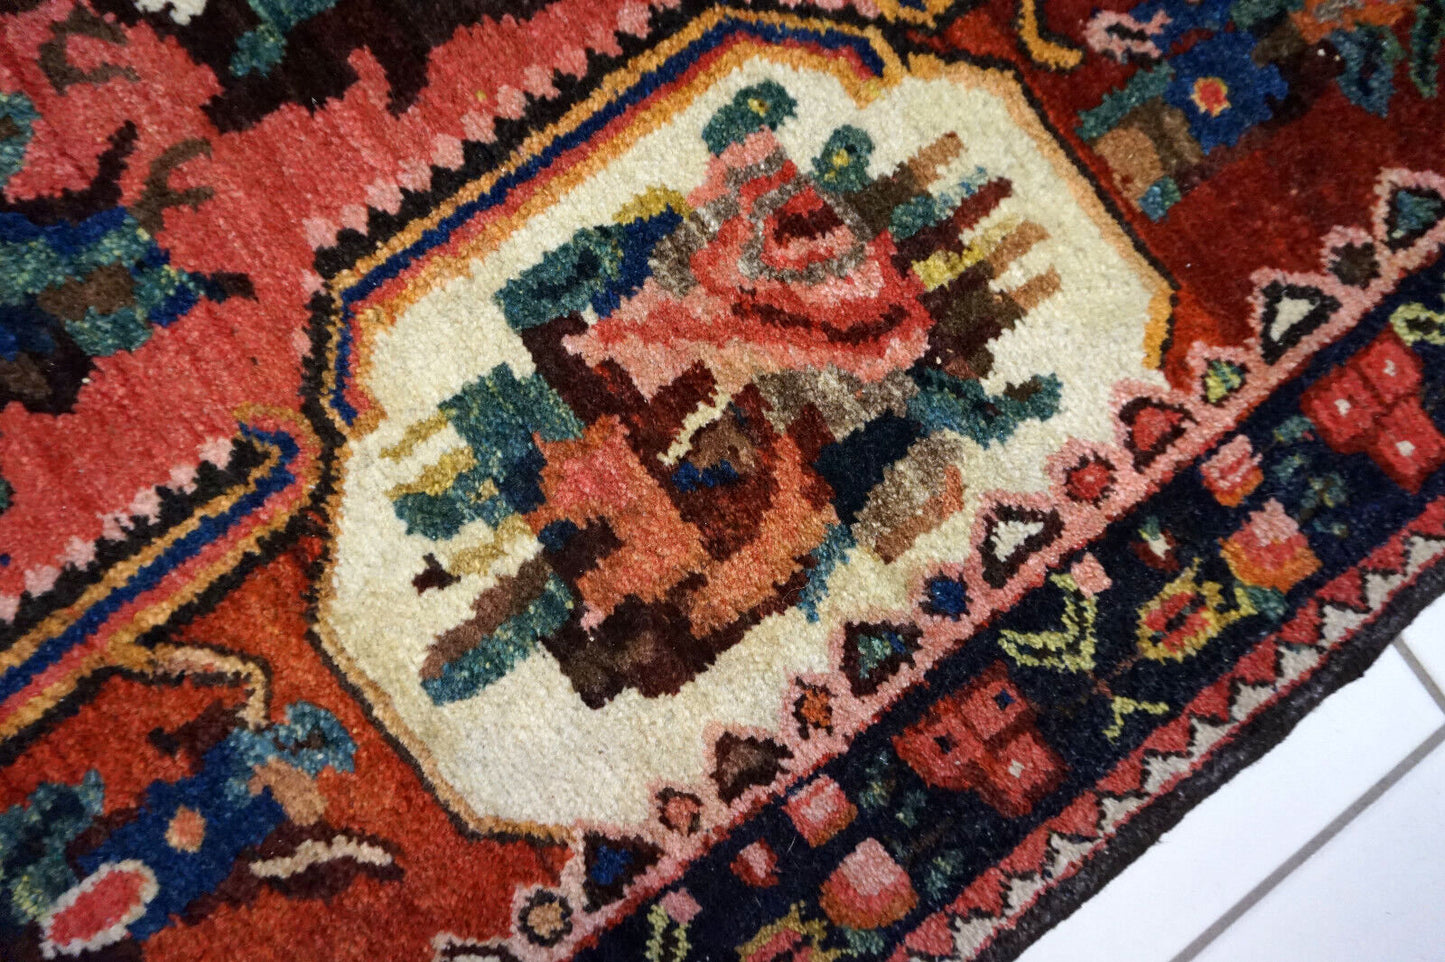 Intricate Details of Handmade Persian Carpet